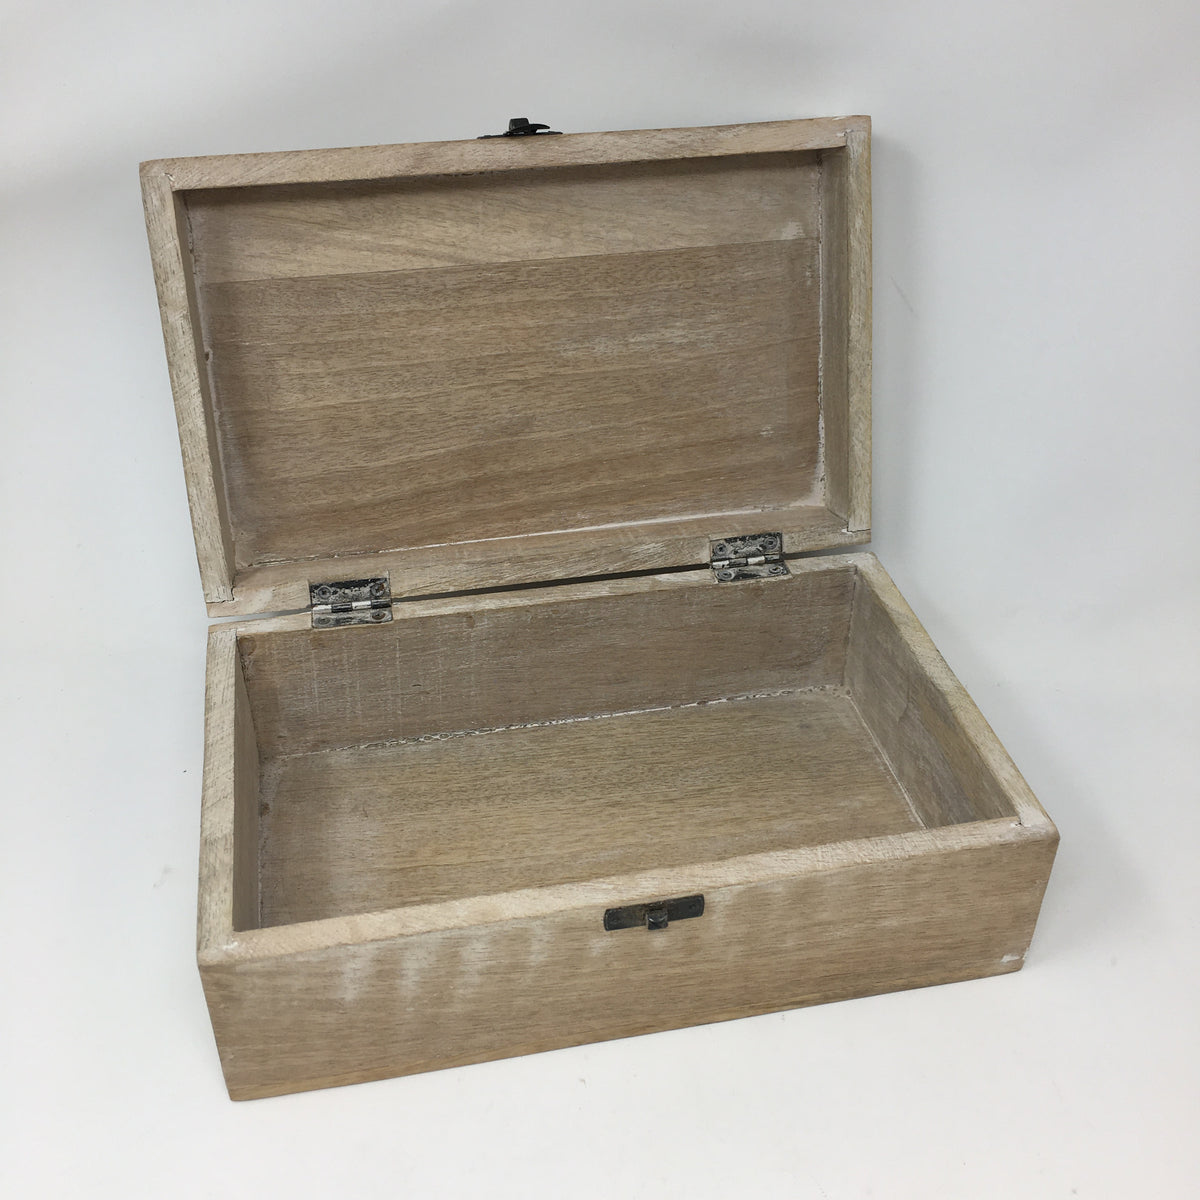 Leafy Print Wood Box